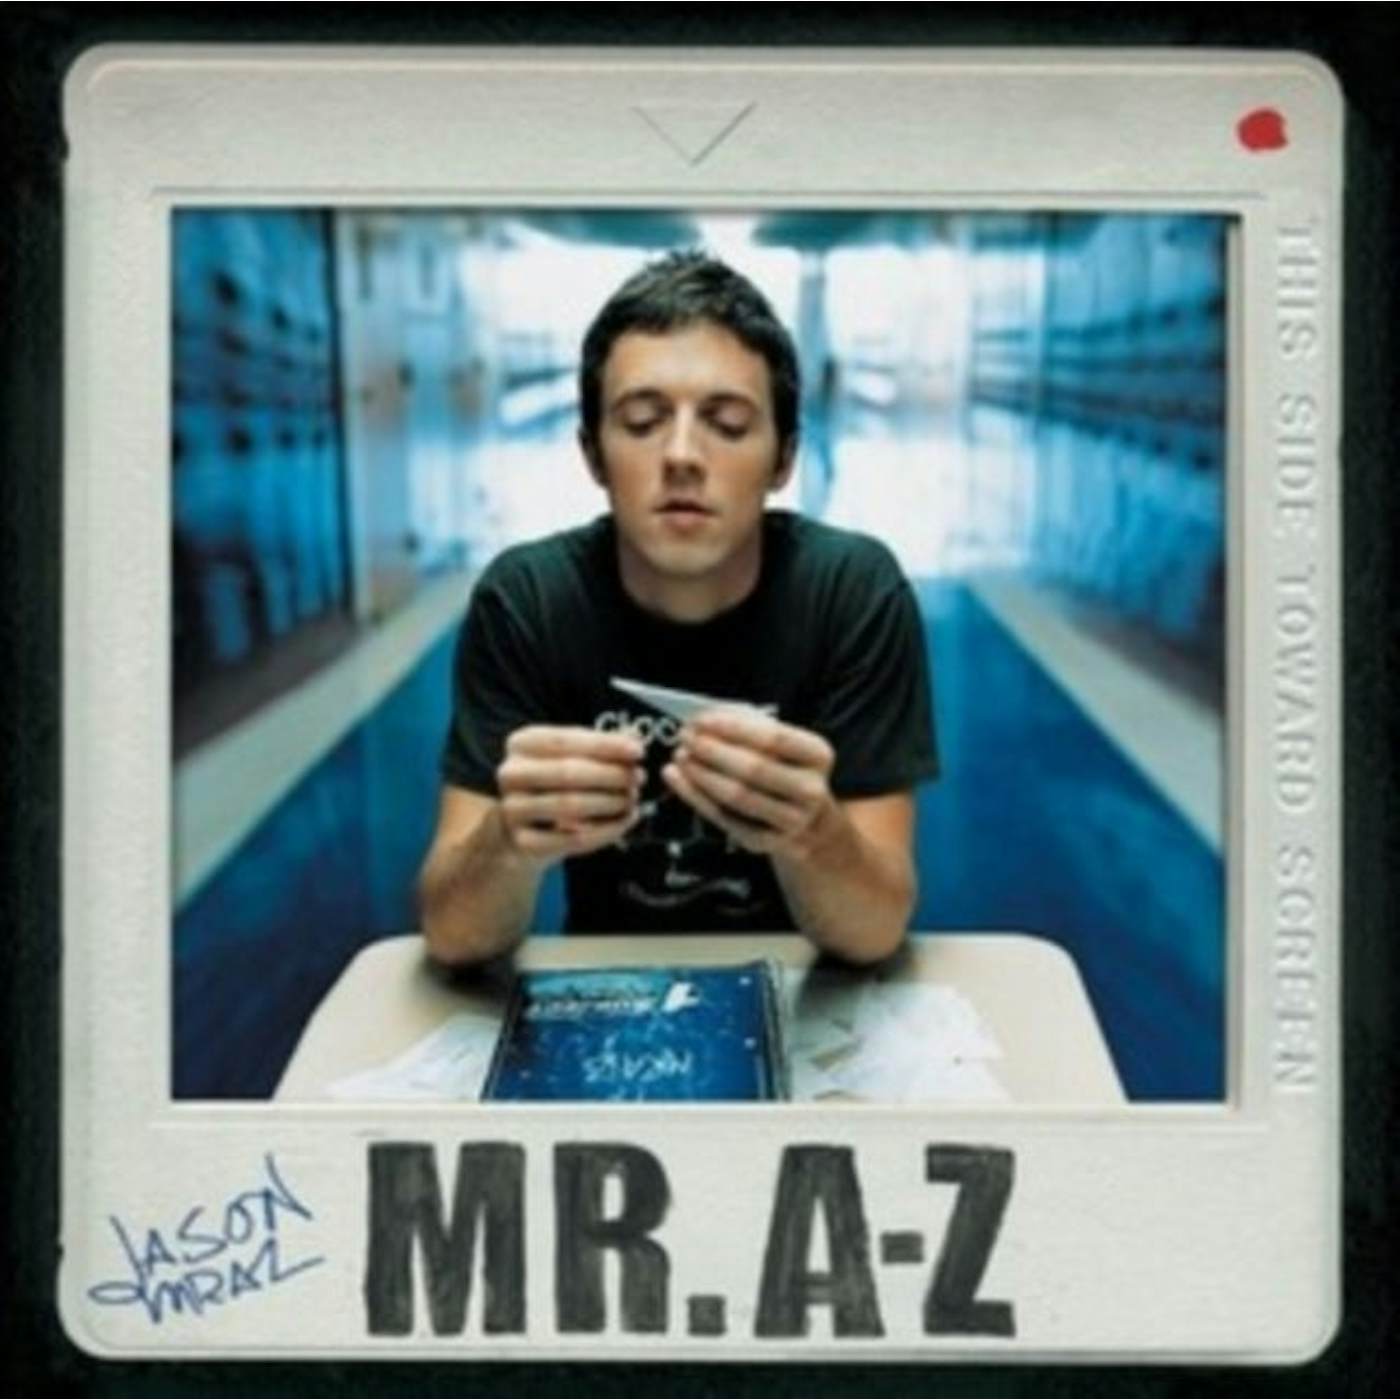 Jason Mraz LP - Mr. A-Z (Deluxe Edition) (Vinyl)